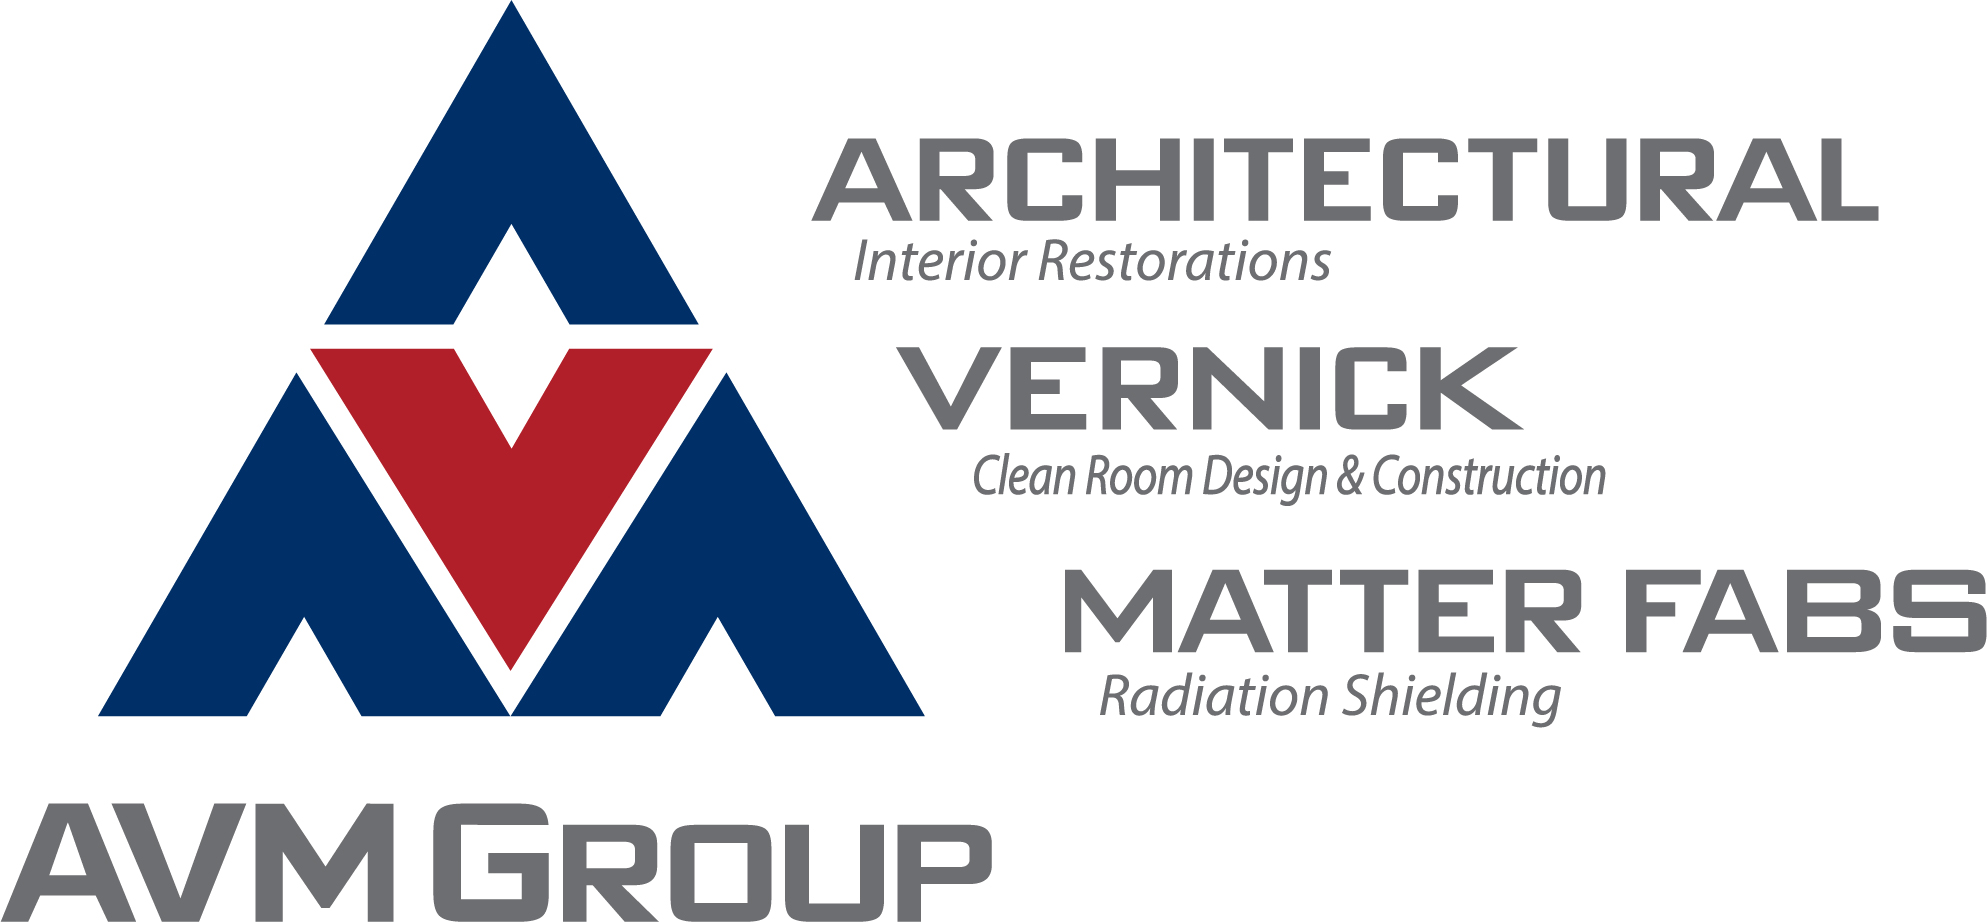 AVM Group Logo with segments rgb